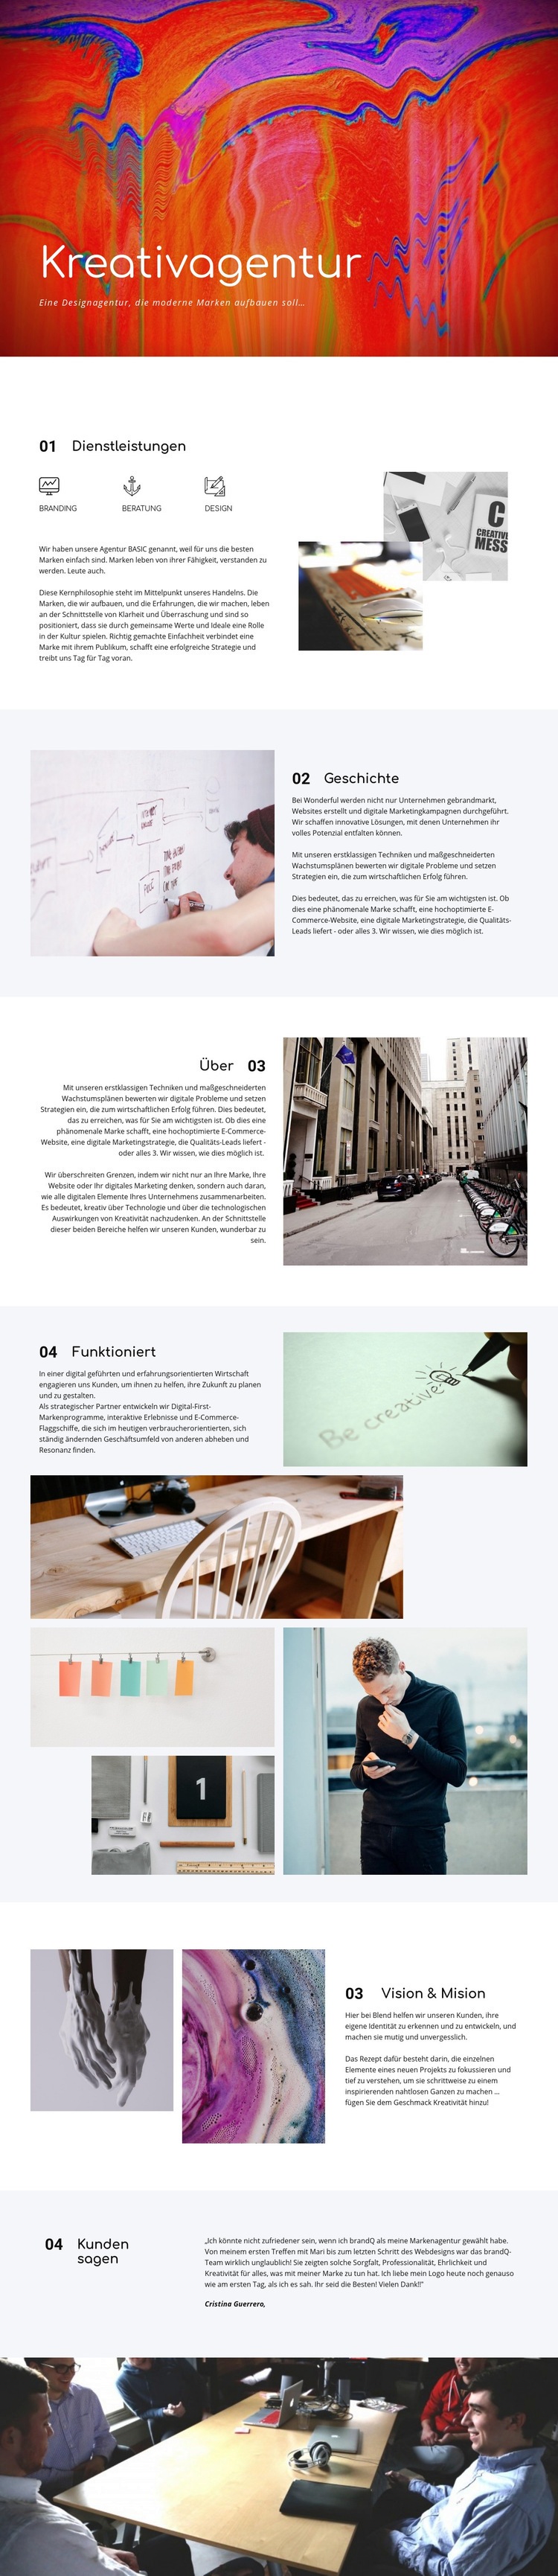 Kreative Galerie Website design